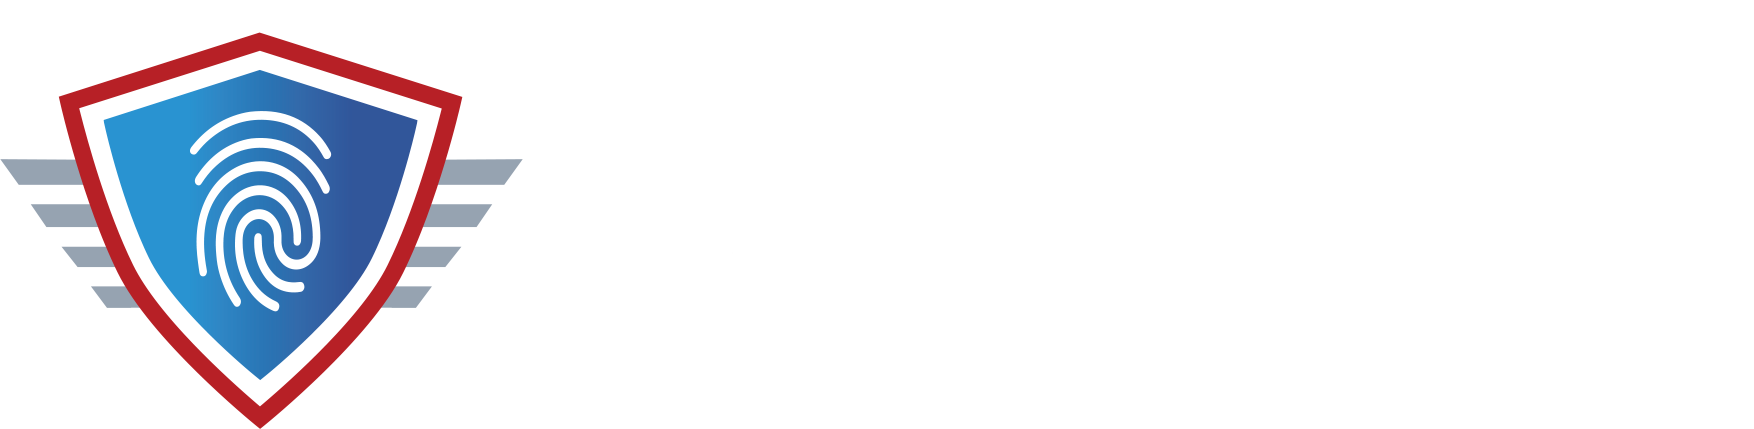 idseal-logo-2.png